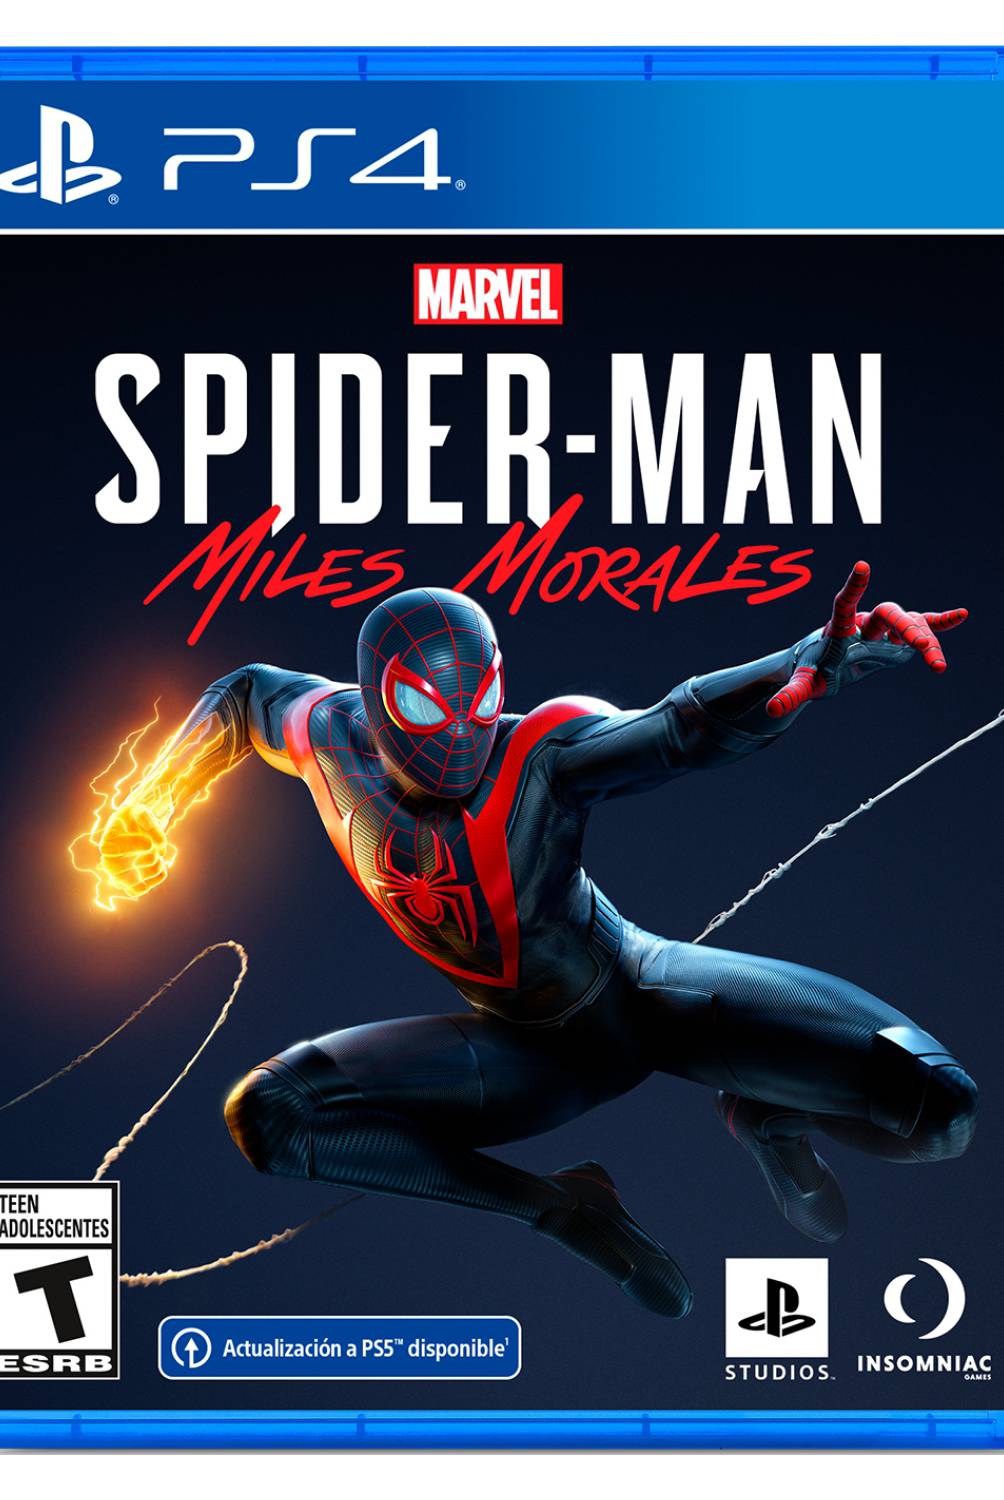 PLAYSTATION - Spider-Man Miles Molares - Ps4 Playstation